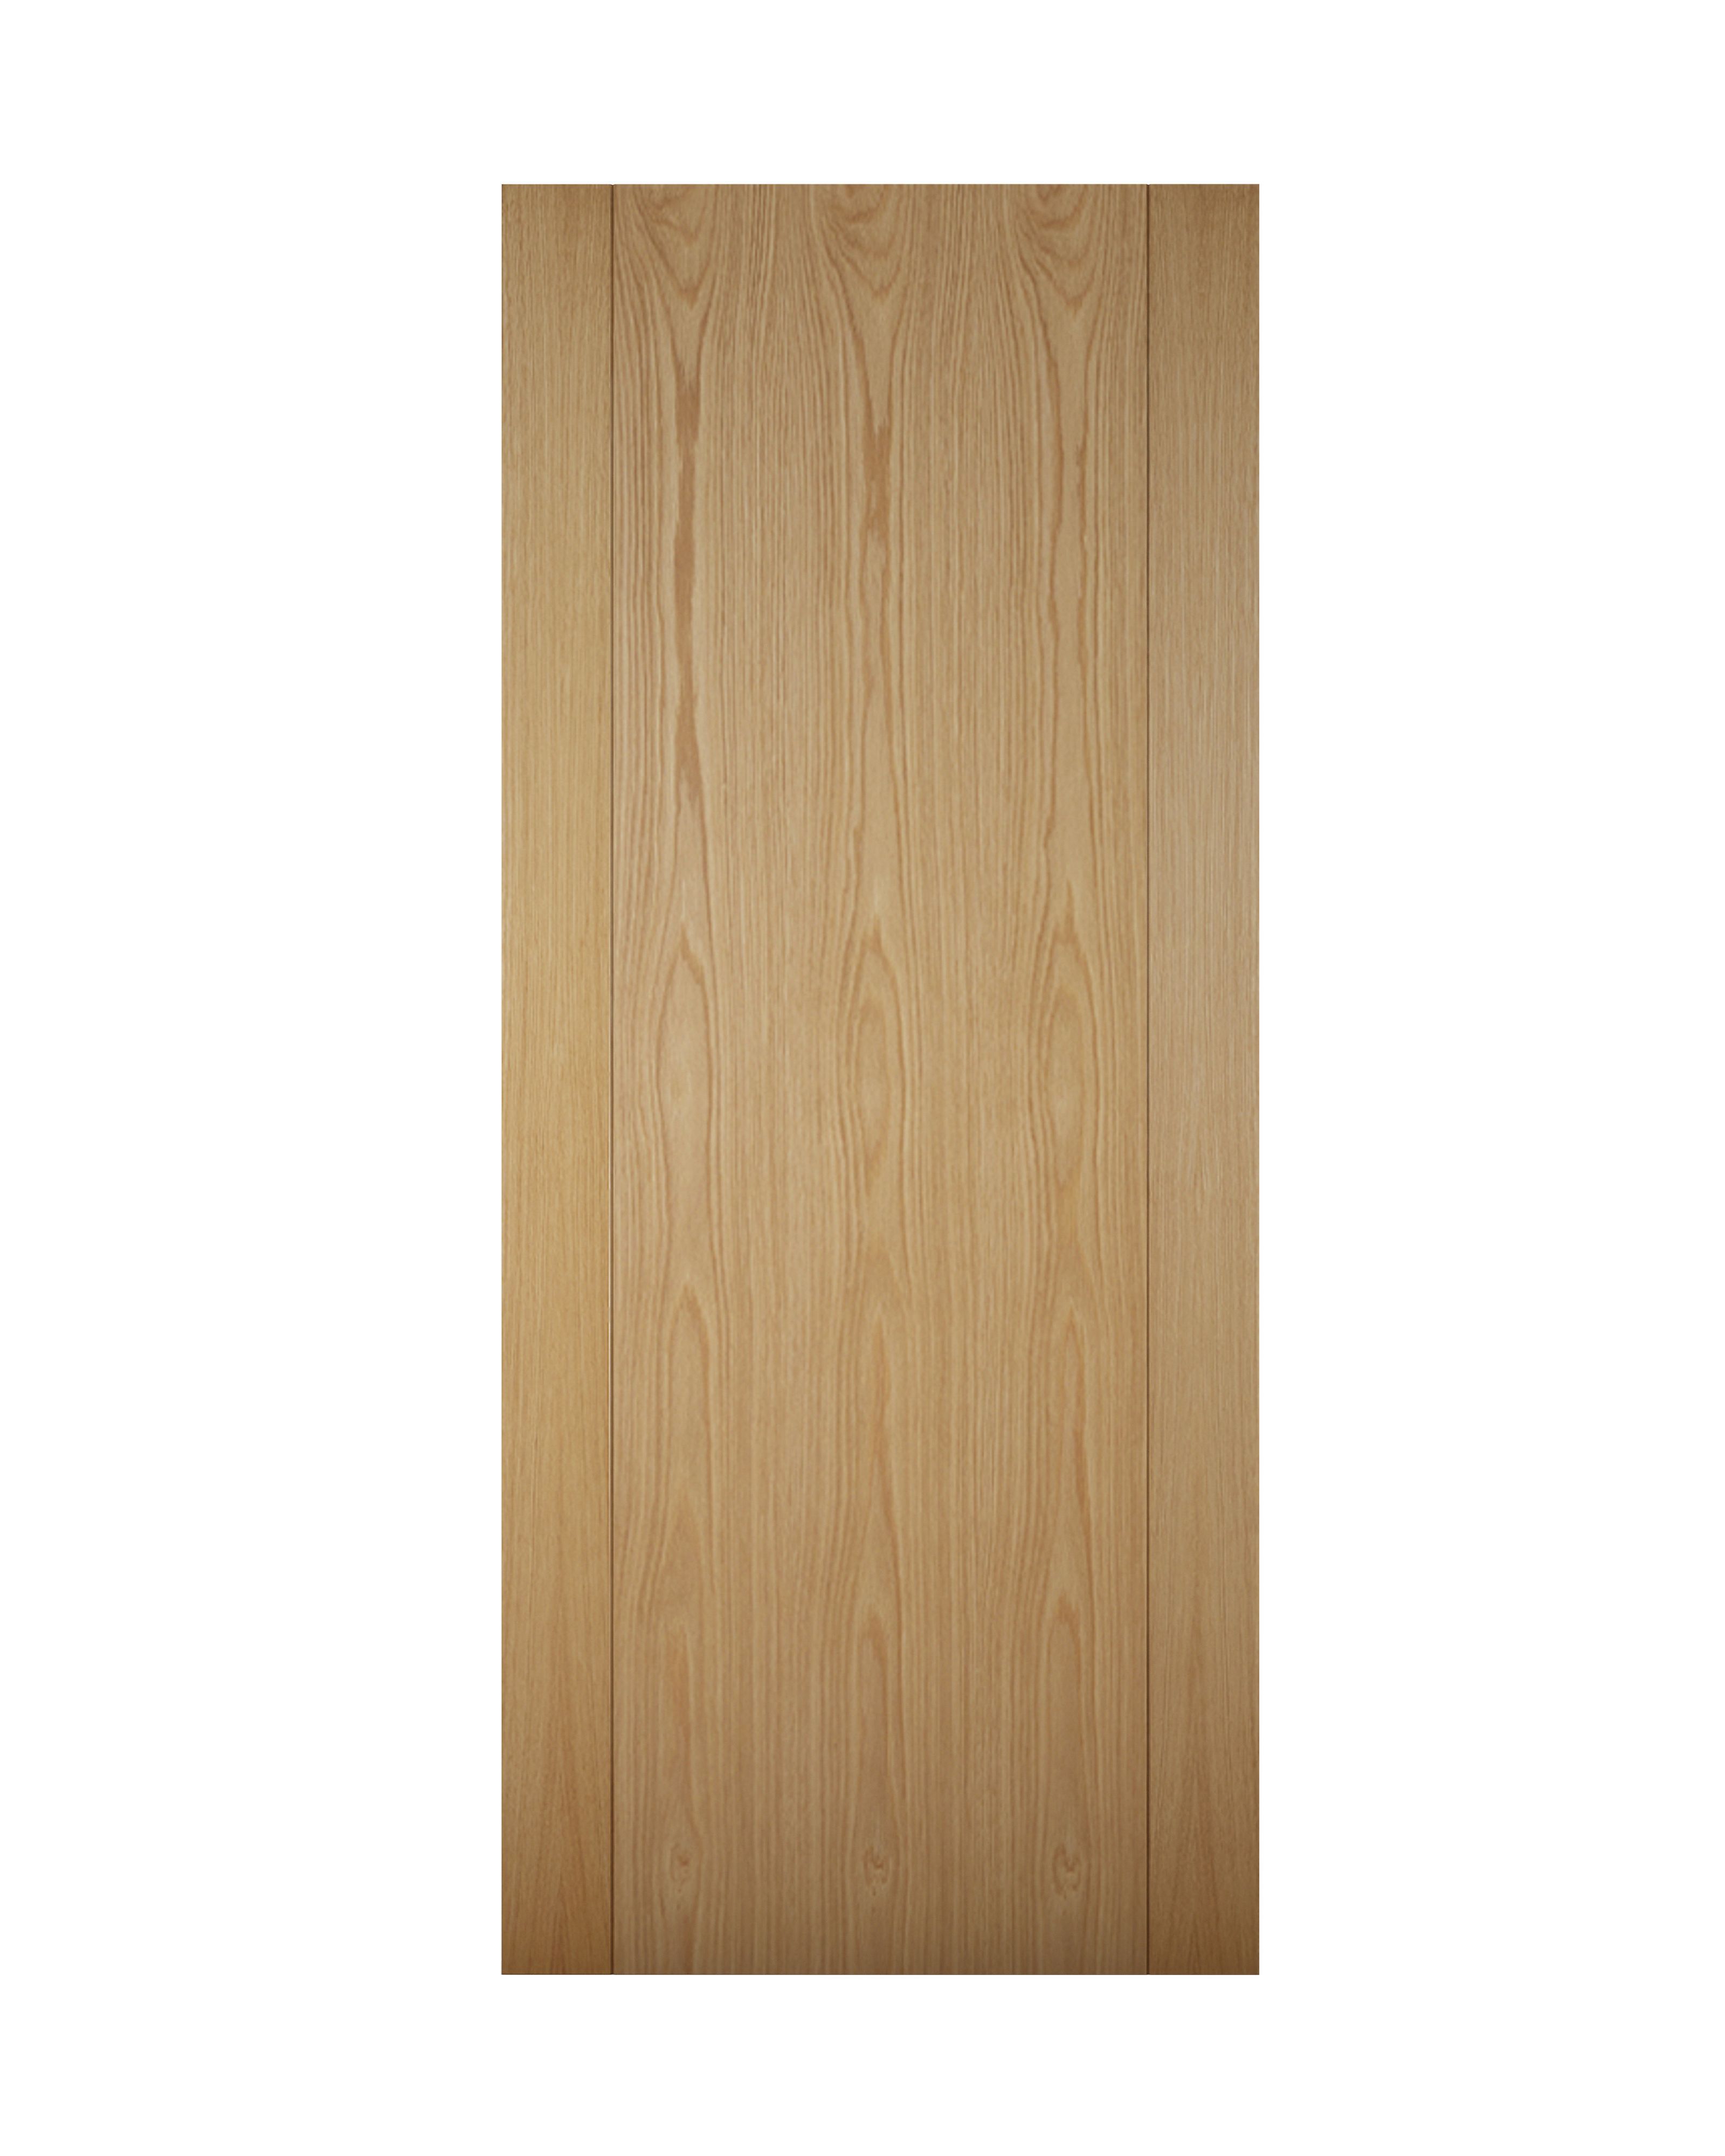 Veneered White oak veneer Front door & frame with letter plate, (H)2074mm (W)932mm